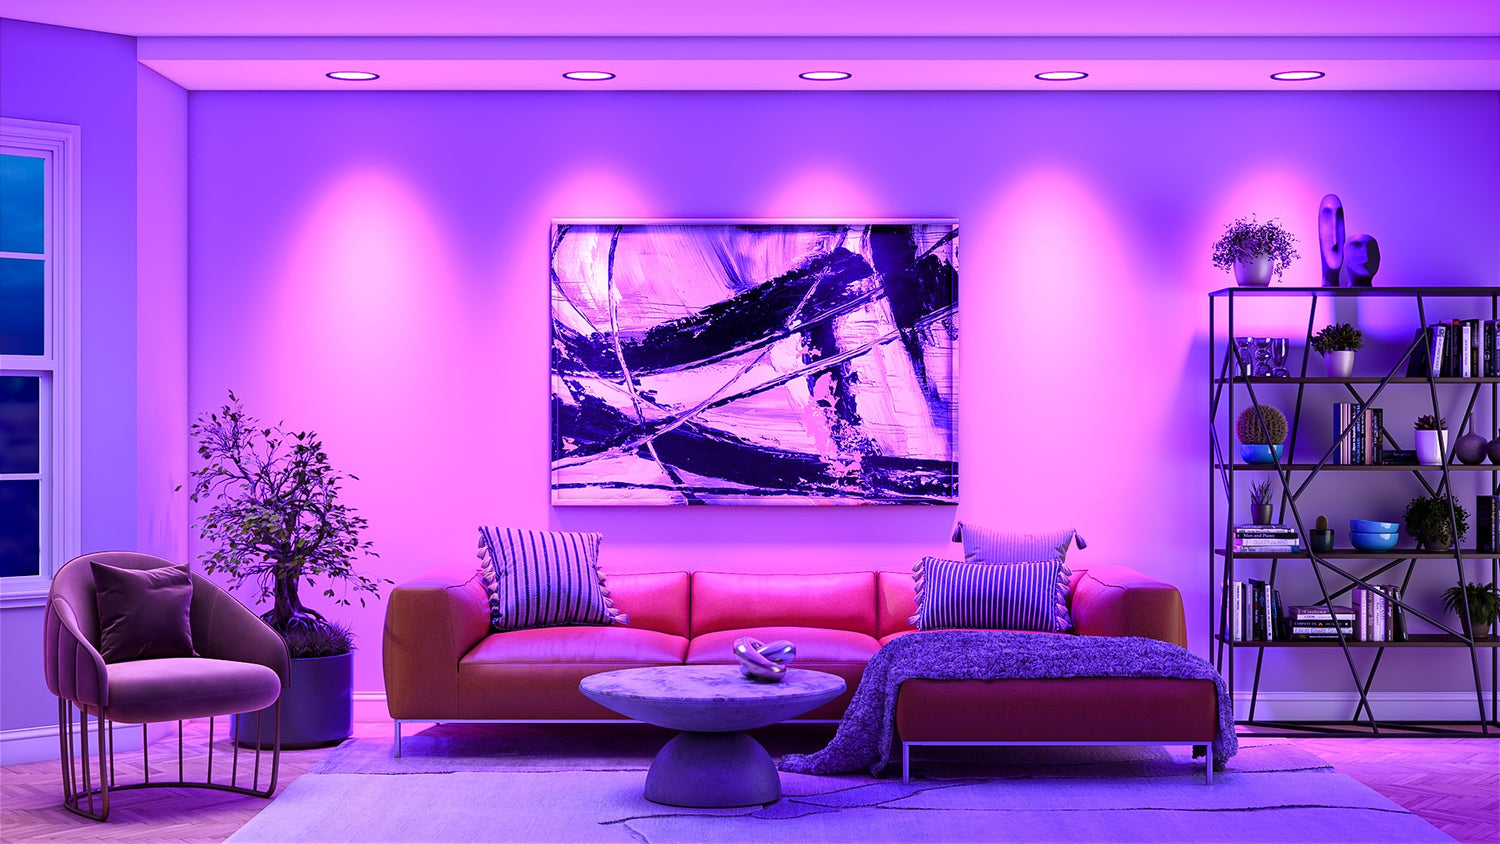 Livingroom with 5 overhead recessed lights casting a pink purple light